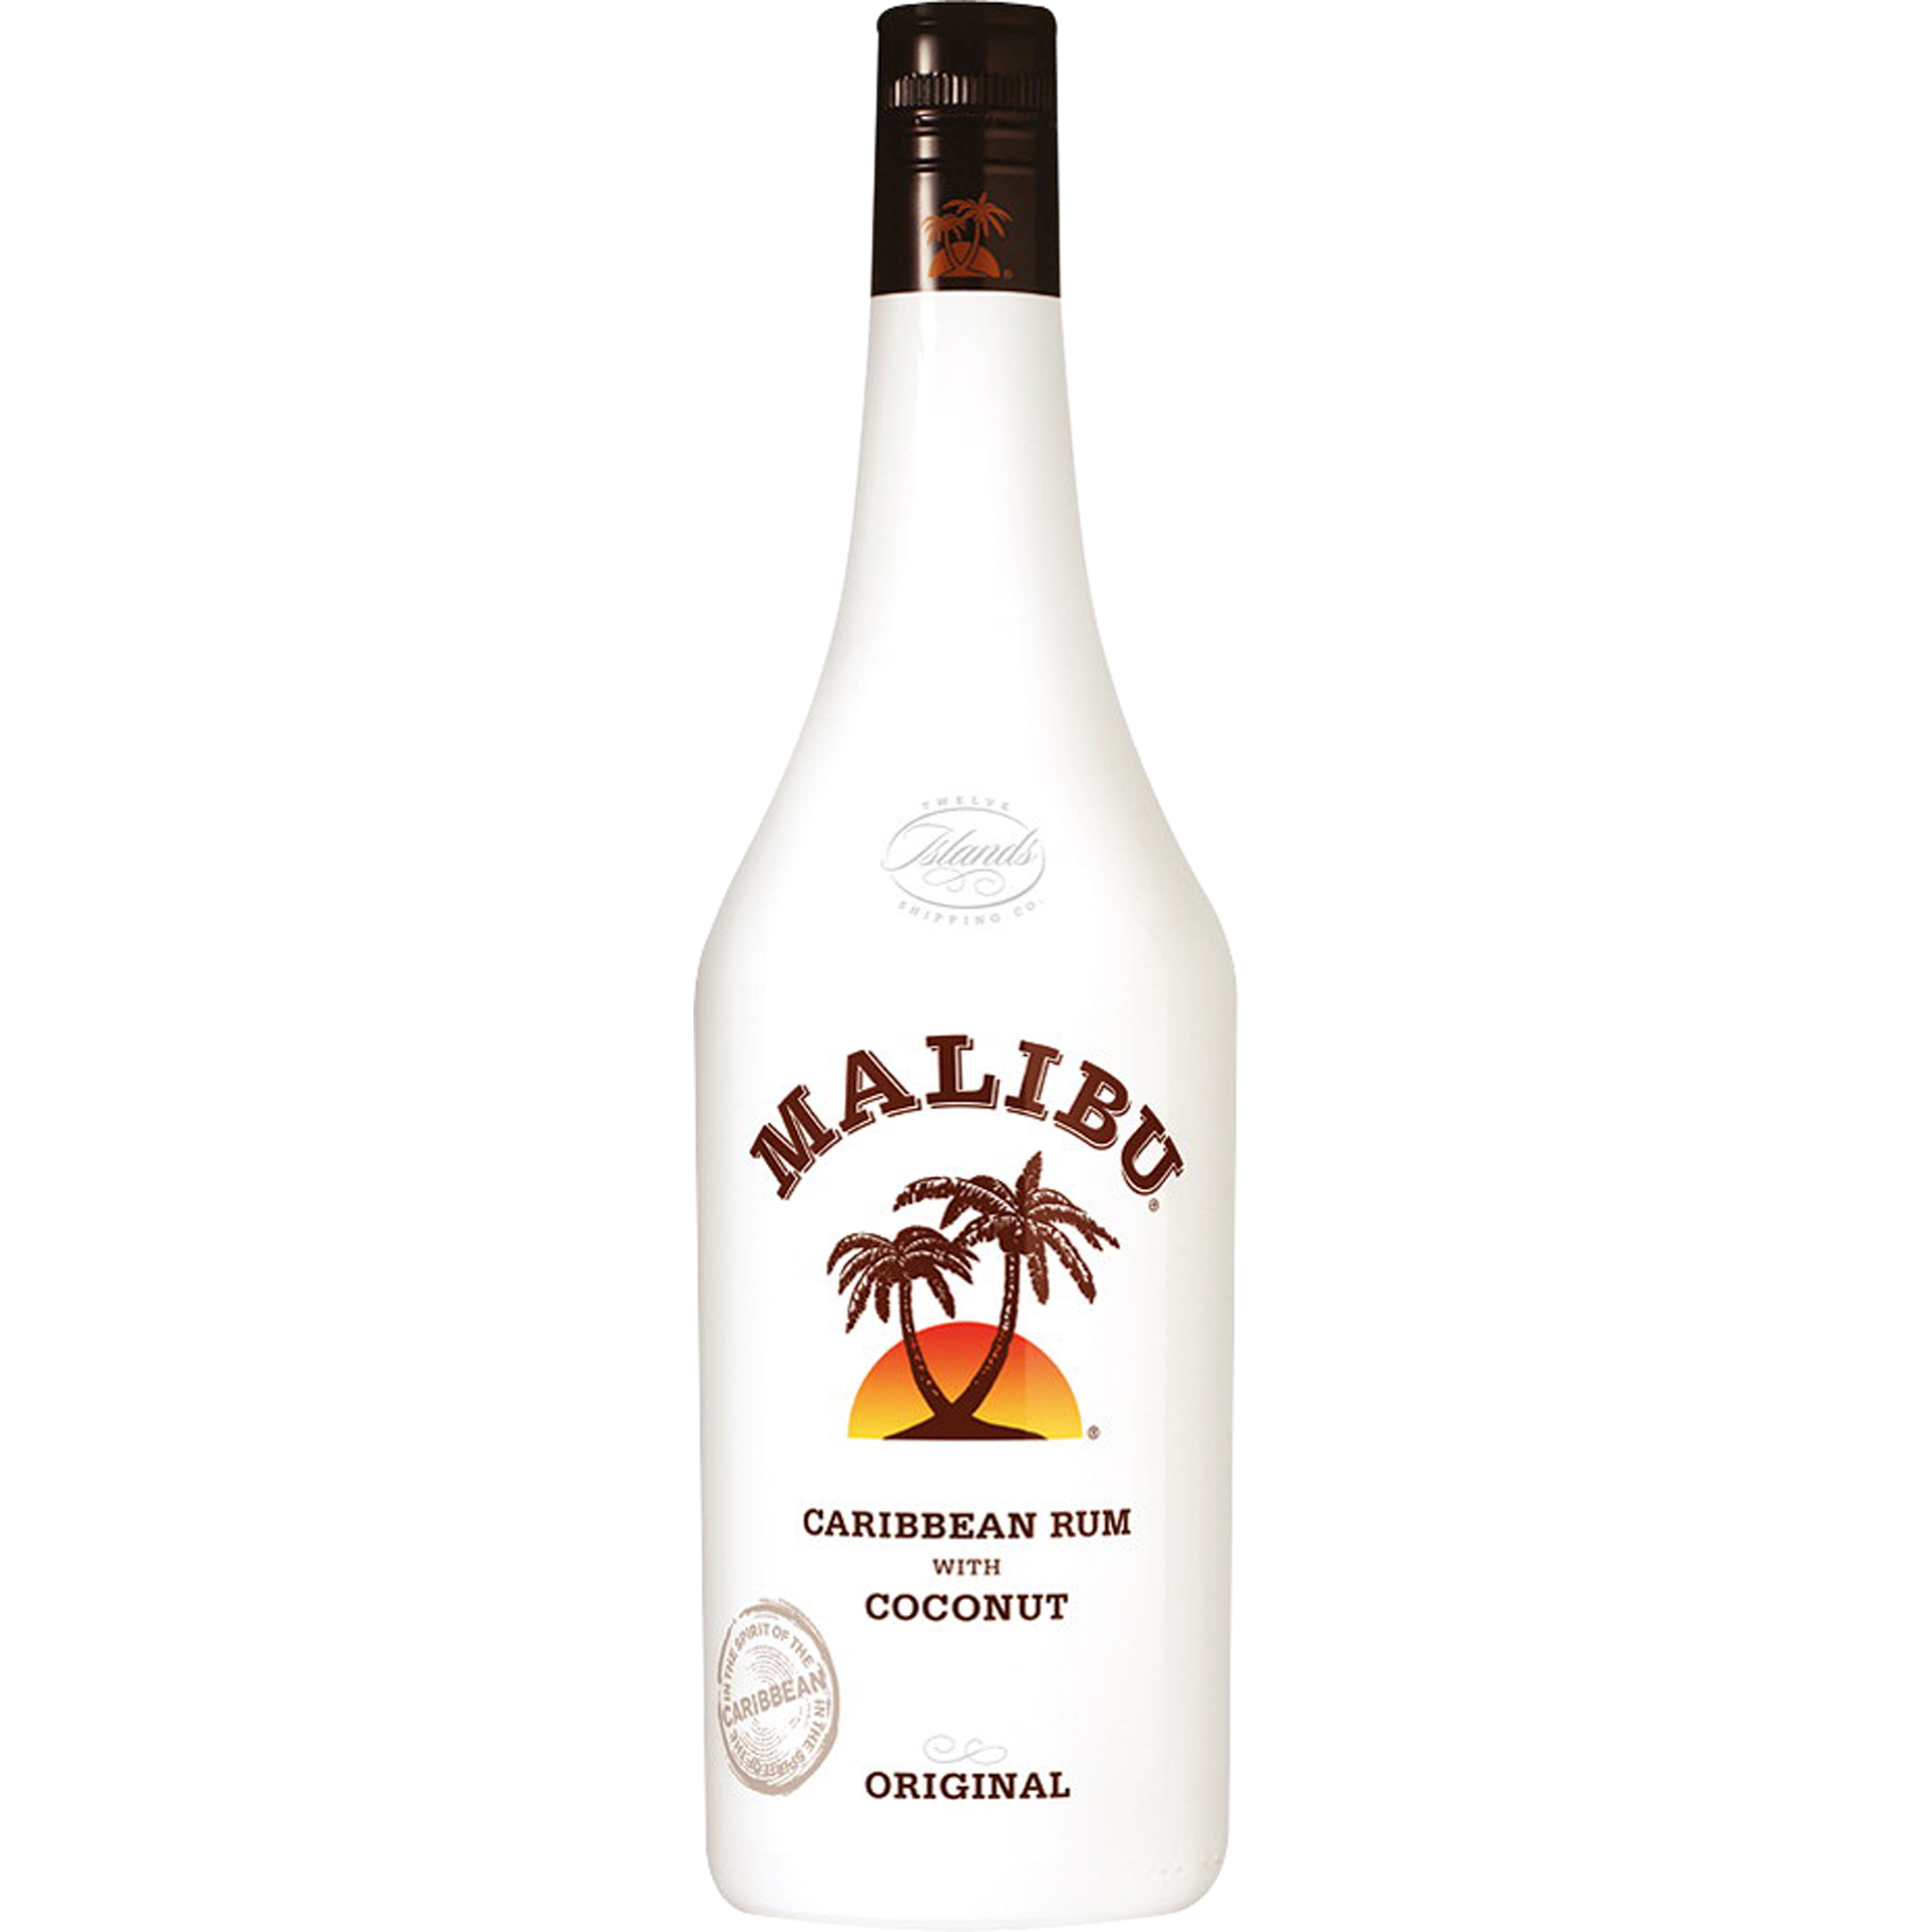 Buy Malibu Caribbean Rum gift